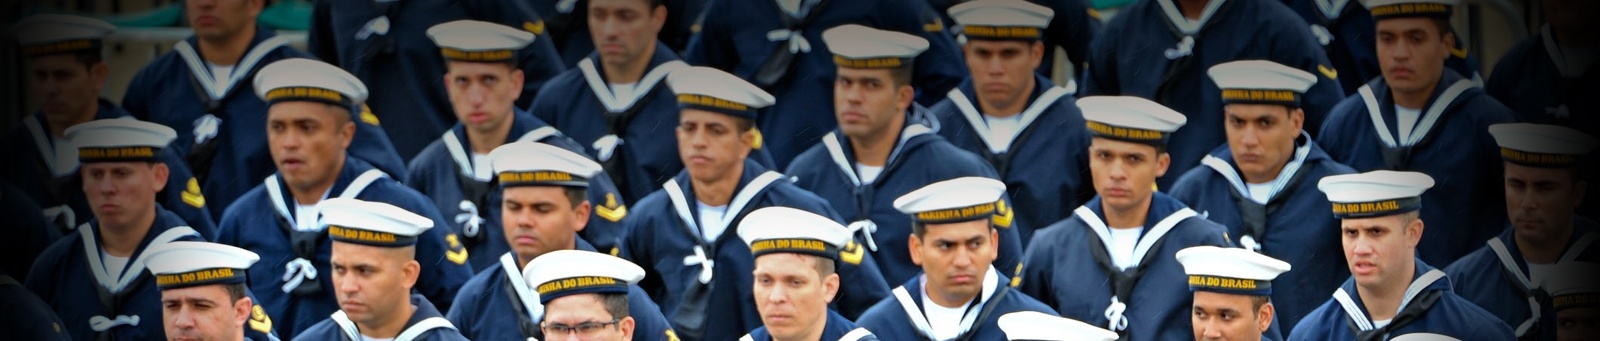 Brazilian Navy crew of ARAGUARI